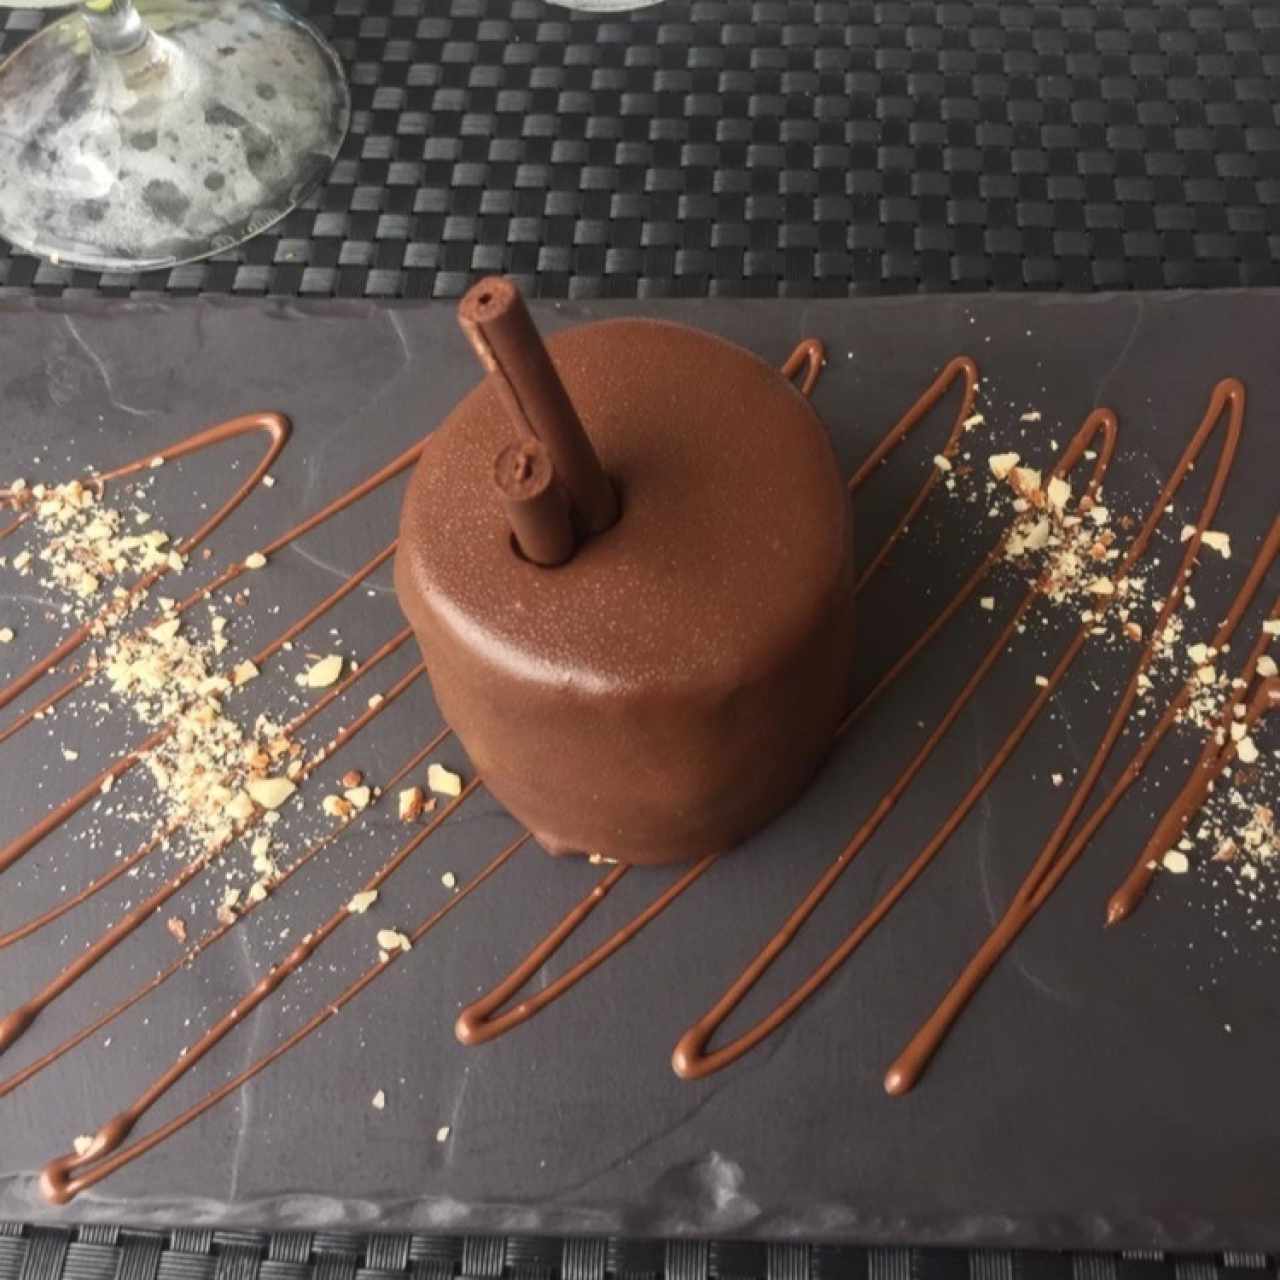 Minicake de chocolate